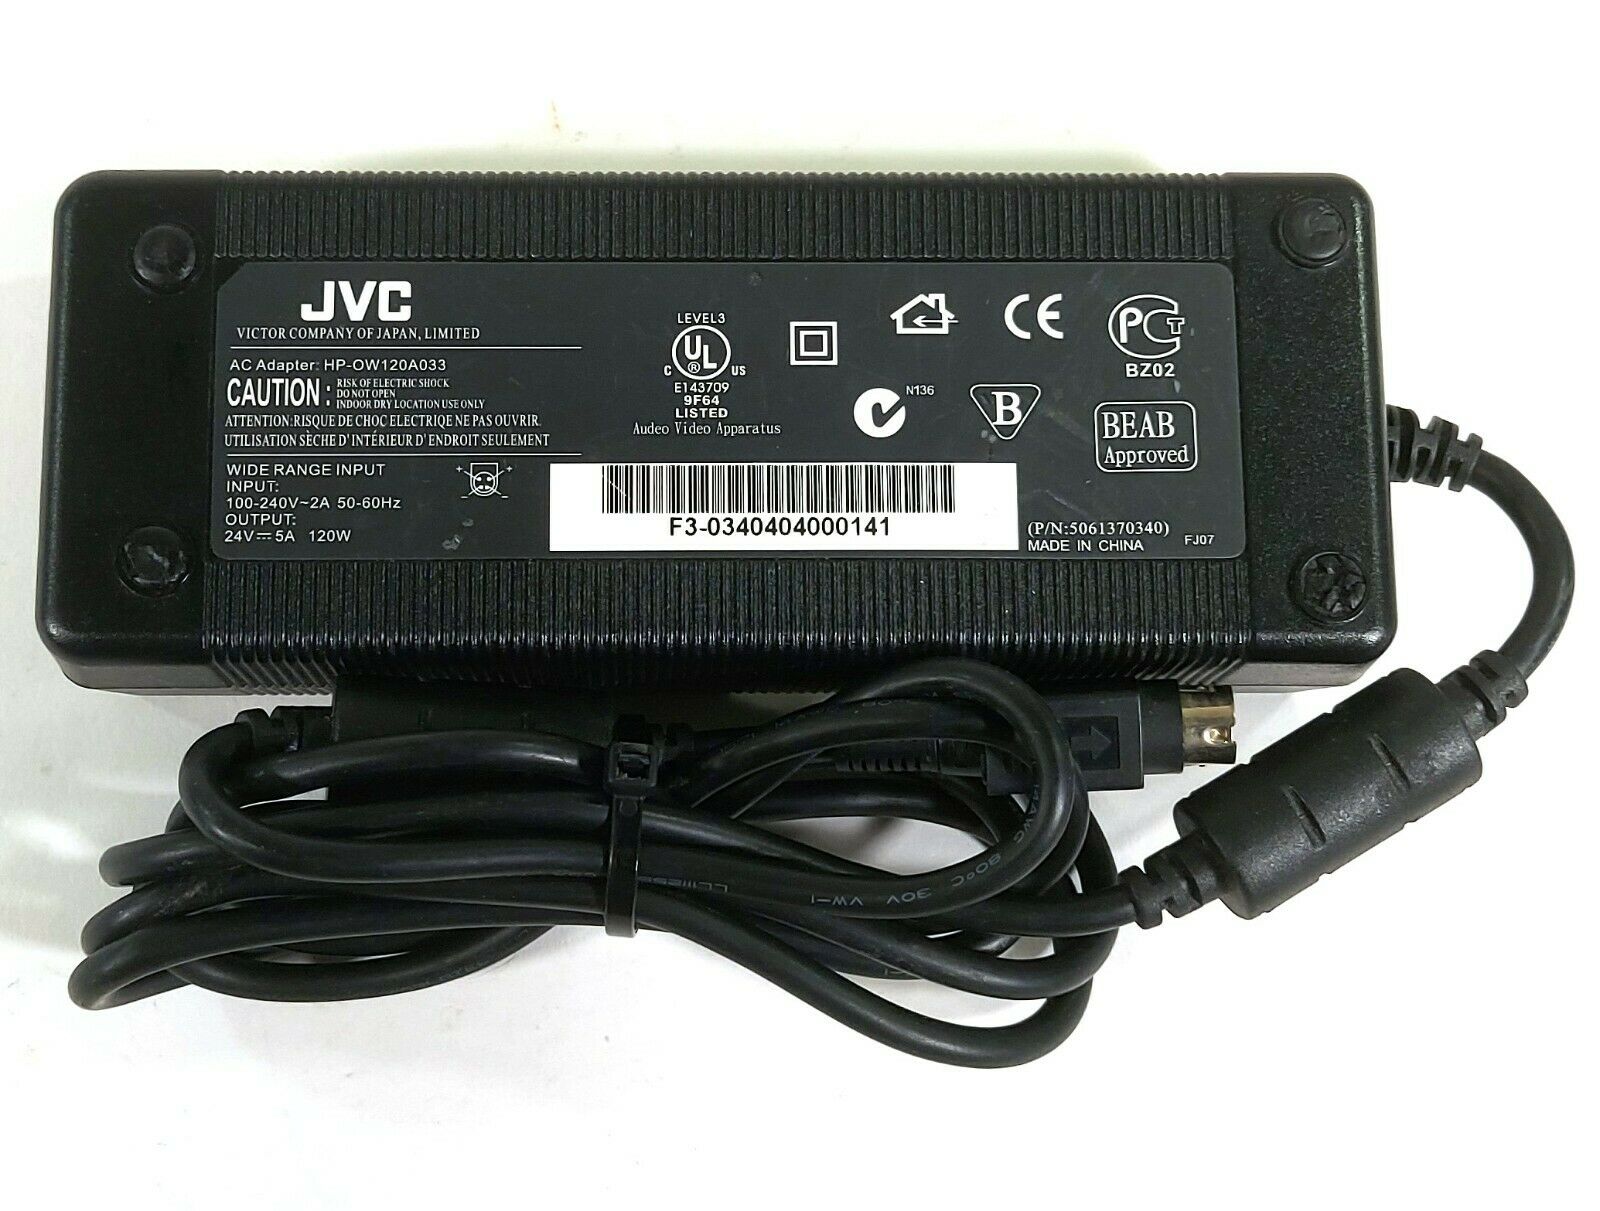 HP-OW120A033 AC/Dc Adapter 24V 5A Original Ladegerät Stromversorgung JVC Marke: JVC Herstellernummer: HP-OW120A033 Ei - Click Image to Close